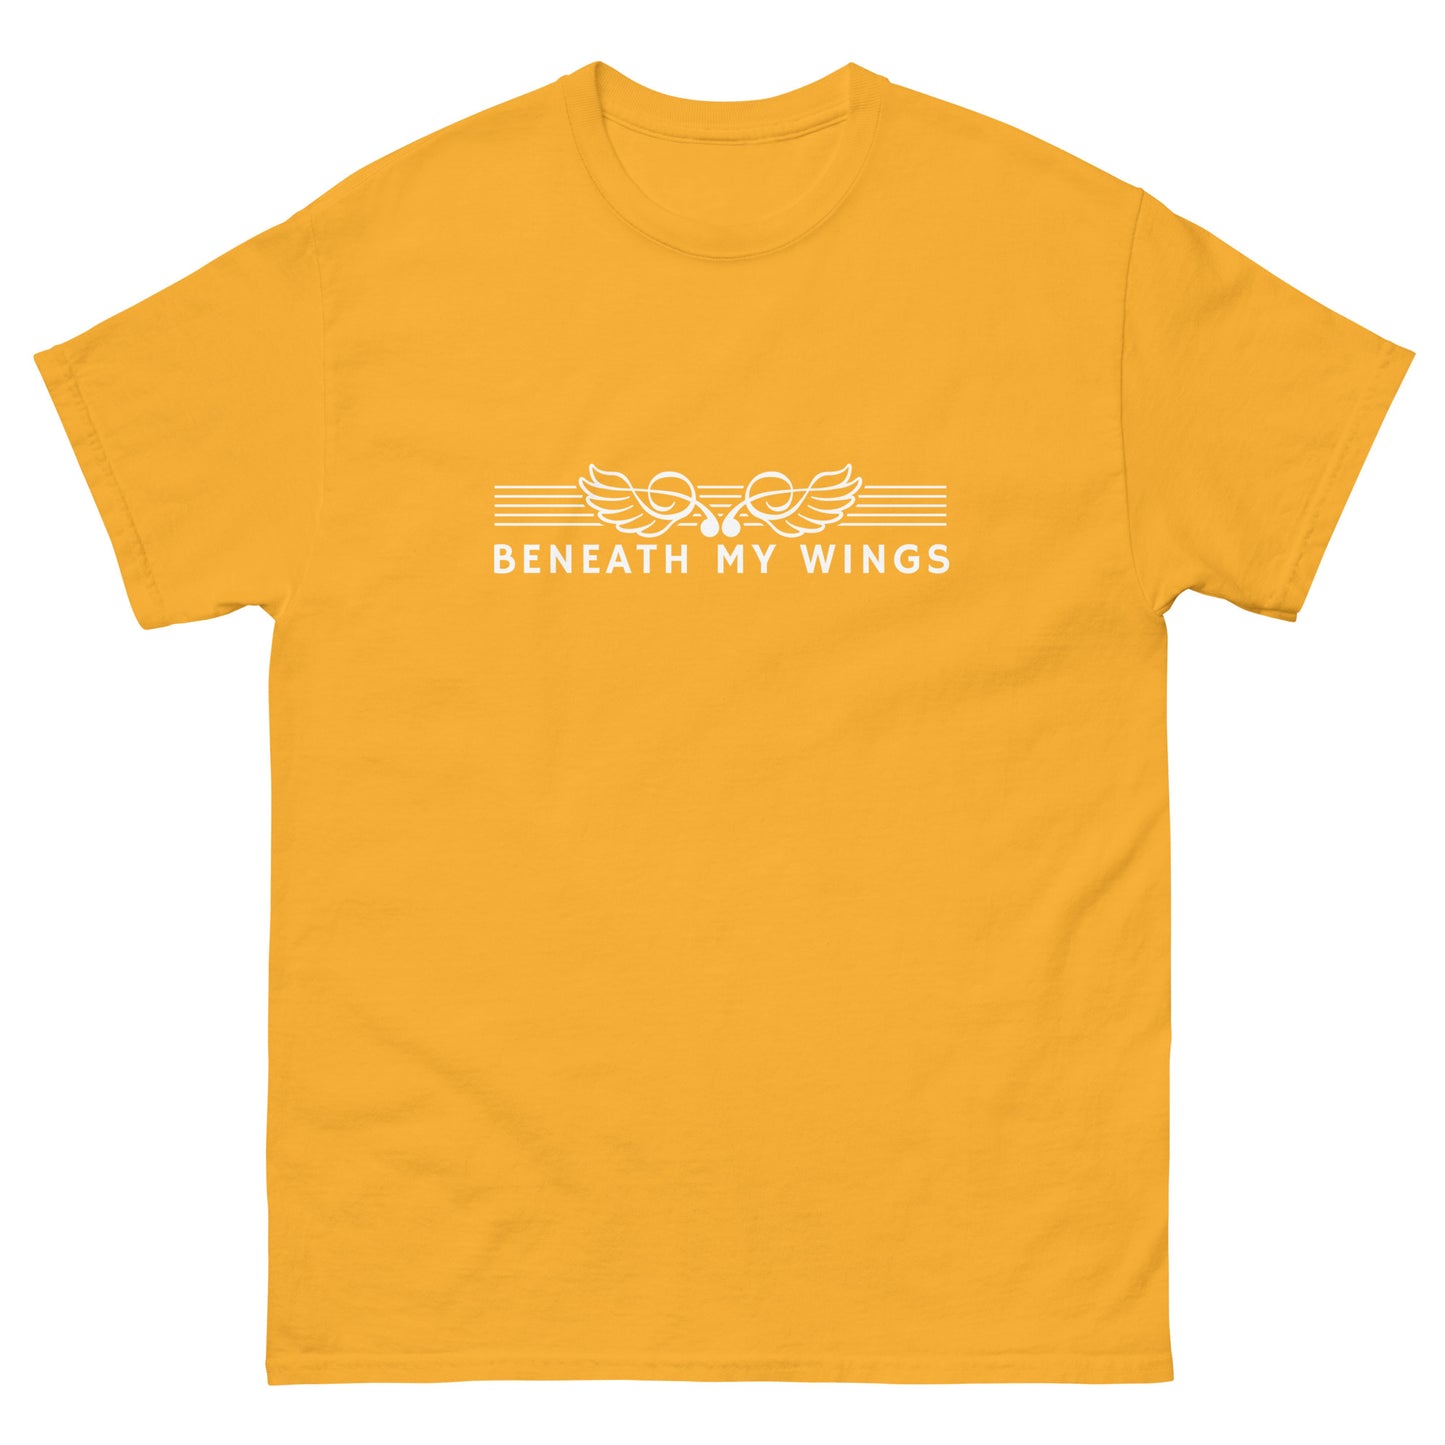 Julian Mendoza "Beneath My Wings" T-Shirt - "Scale" (White Print)